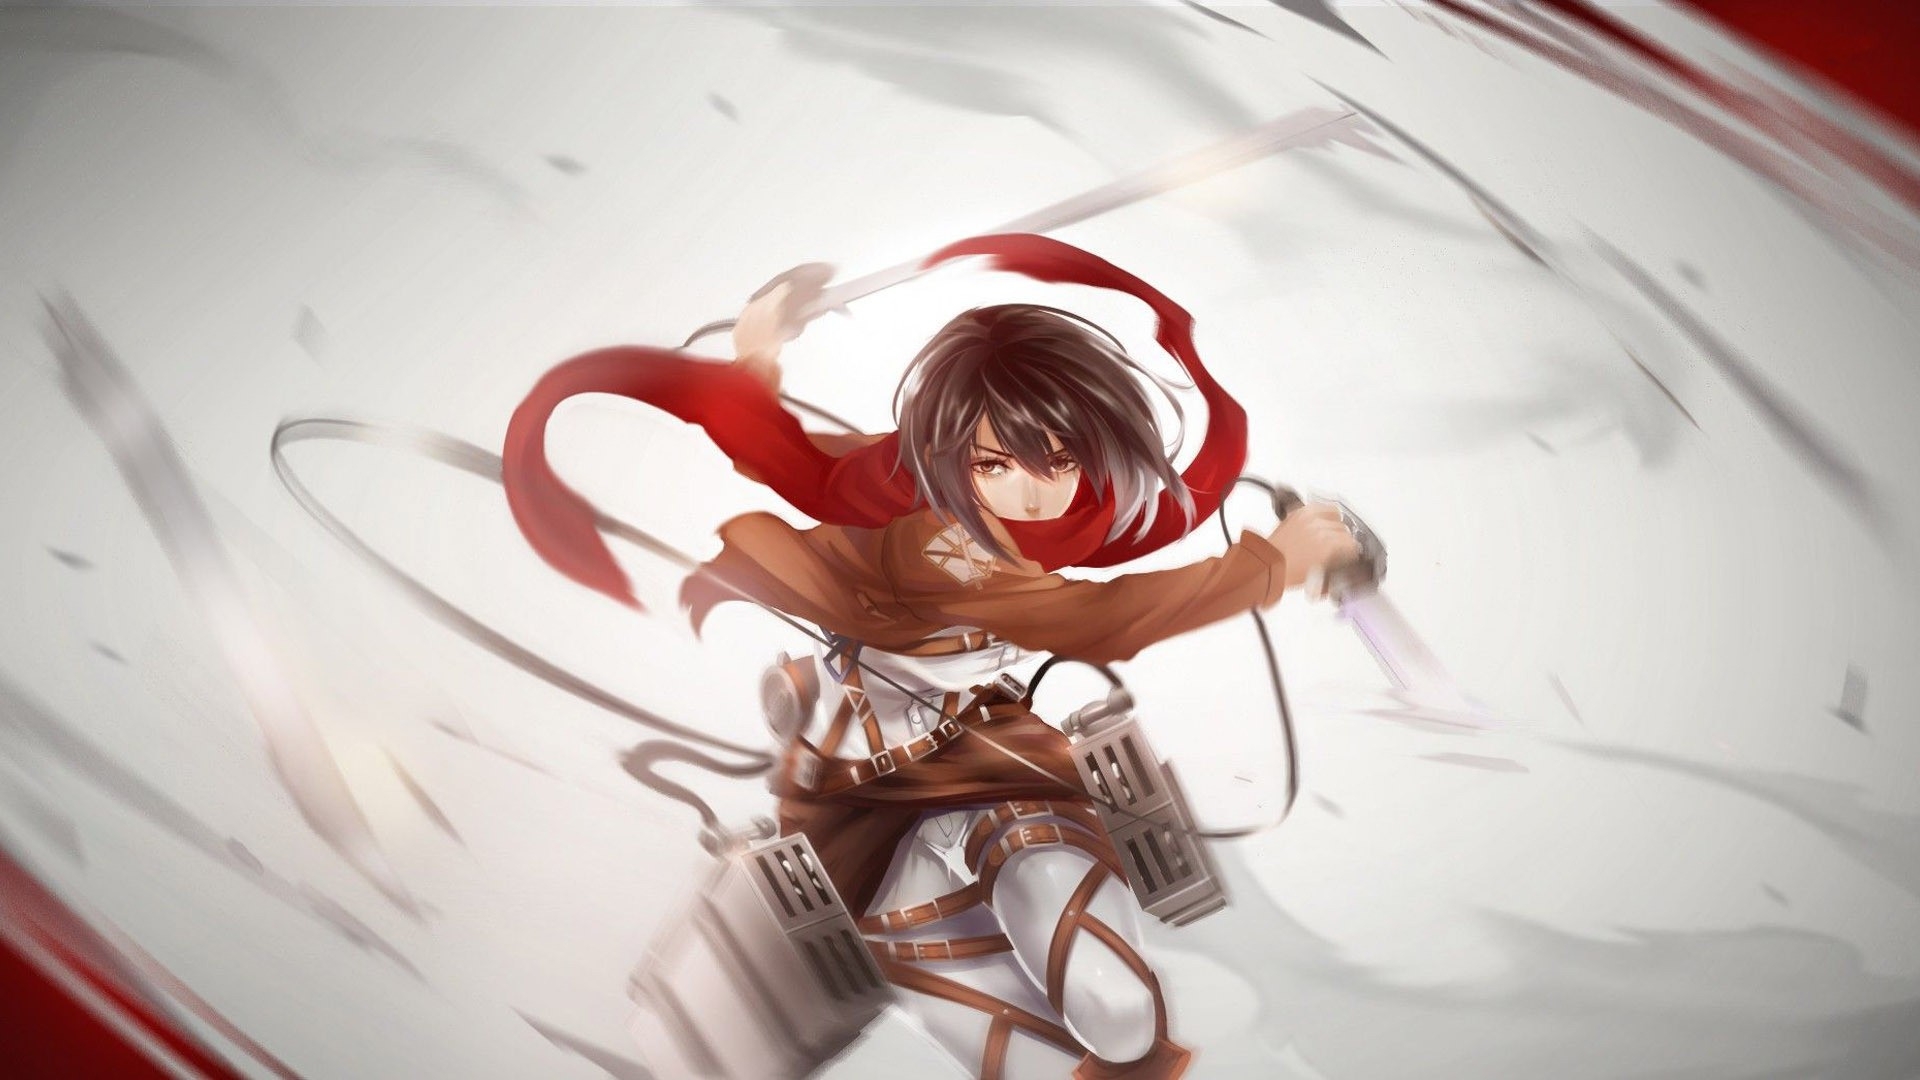 Mikasa Ackerman, Shingeki No Kyojin, Red Scarf, Uniform, - Attack On Titan Wallpaper Mikasa - HD Wallpaper 